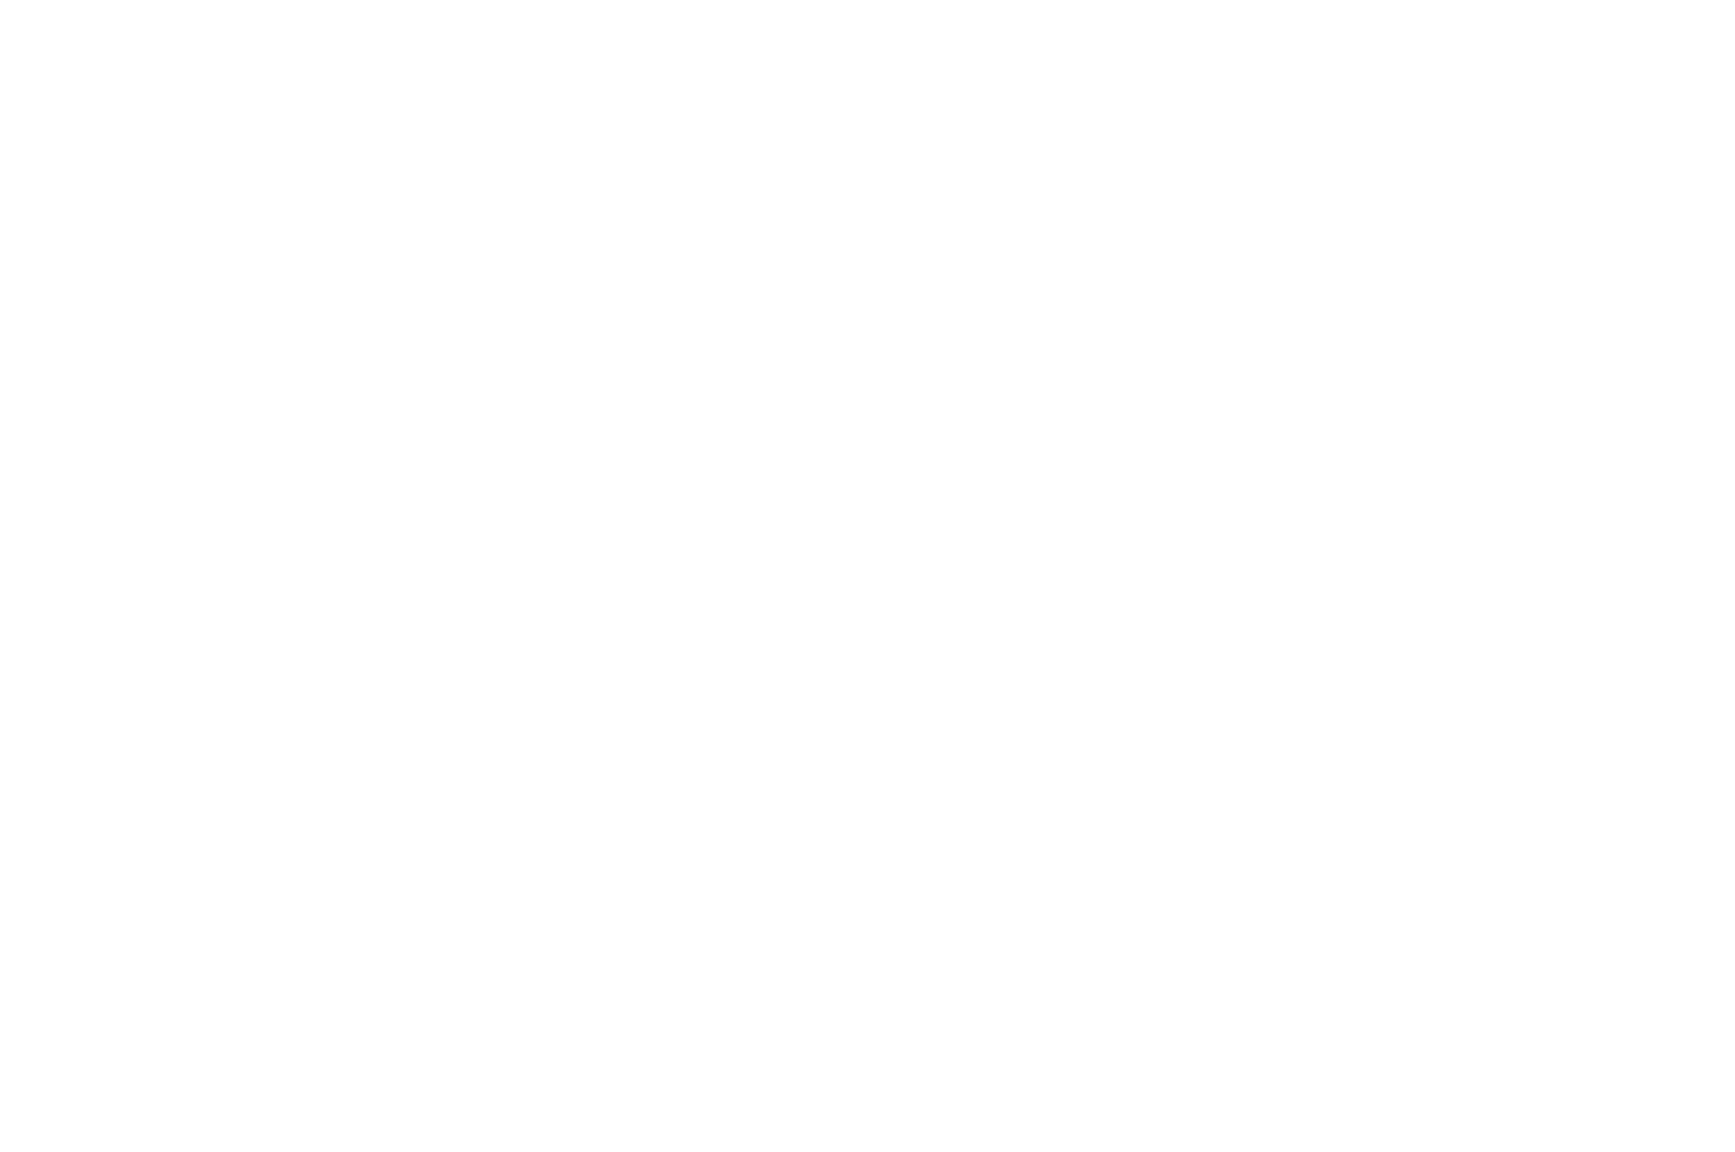 OFFICIAL SELECTION   Nightpiece Film Festival 2018 Edinburgh Fringe   2017 White